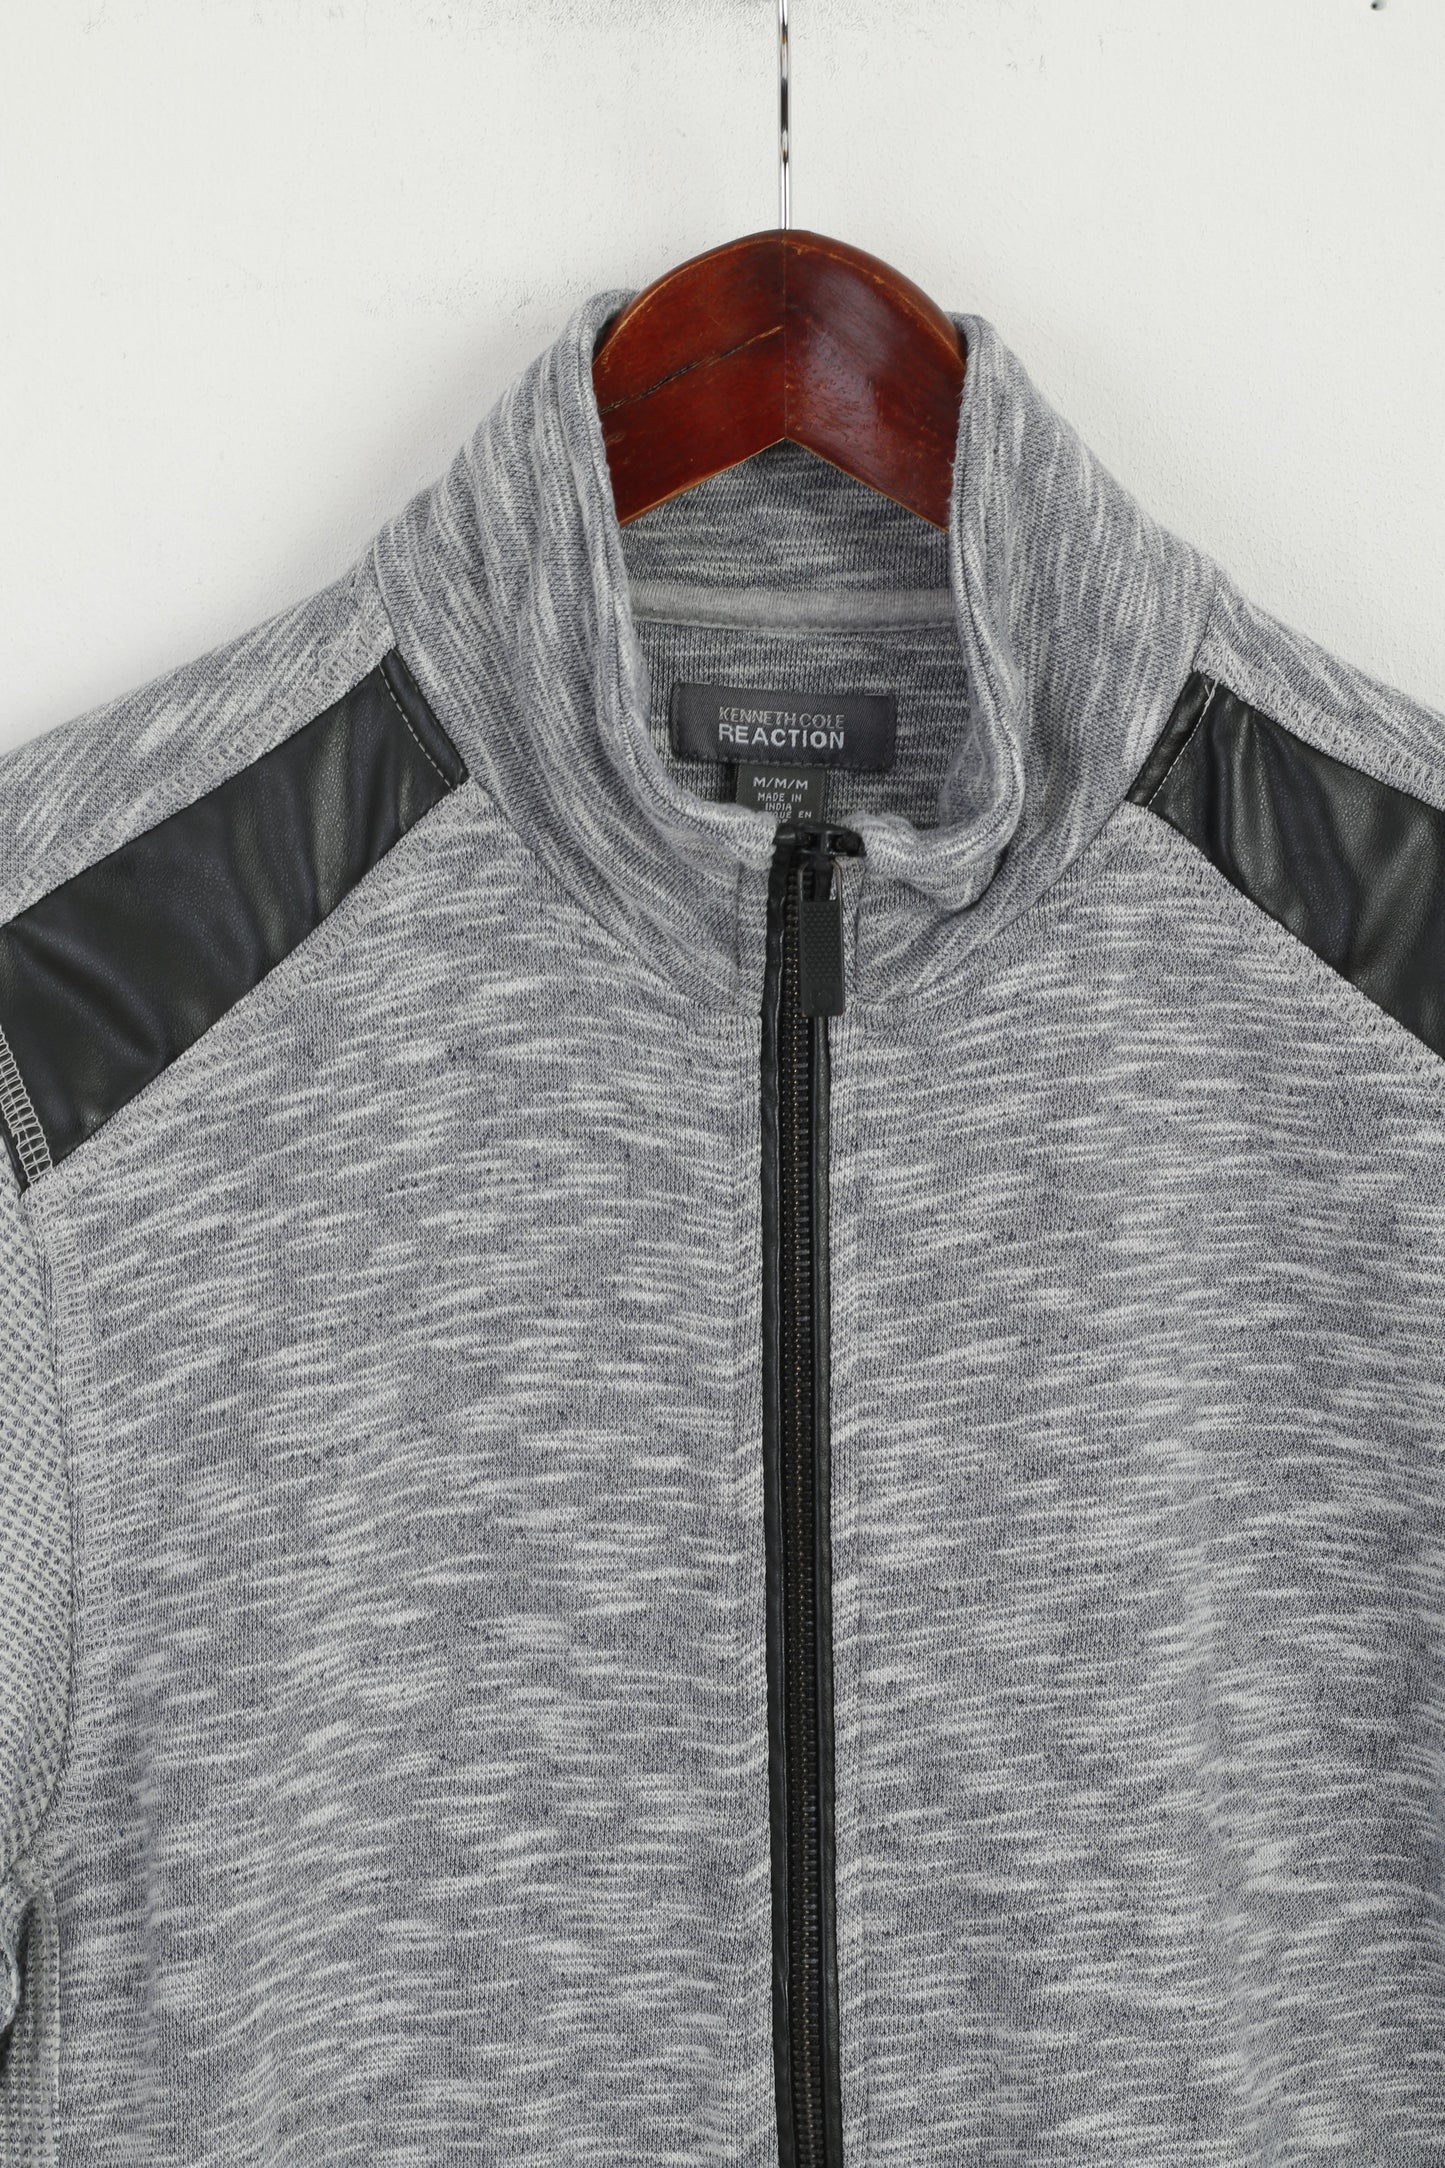 Kenneth Cole Reaction Women M Sweatshirt Grey Cotton Detailed Zip Up Top